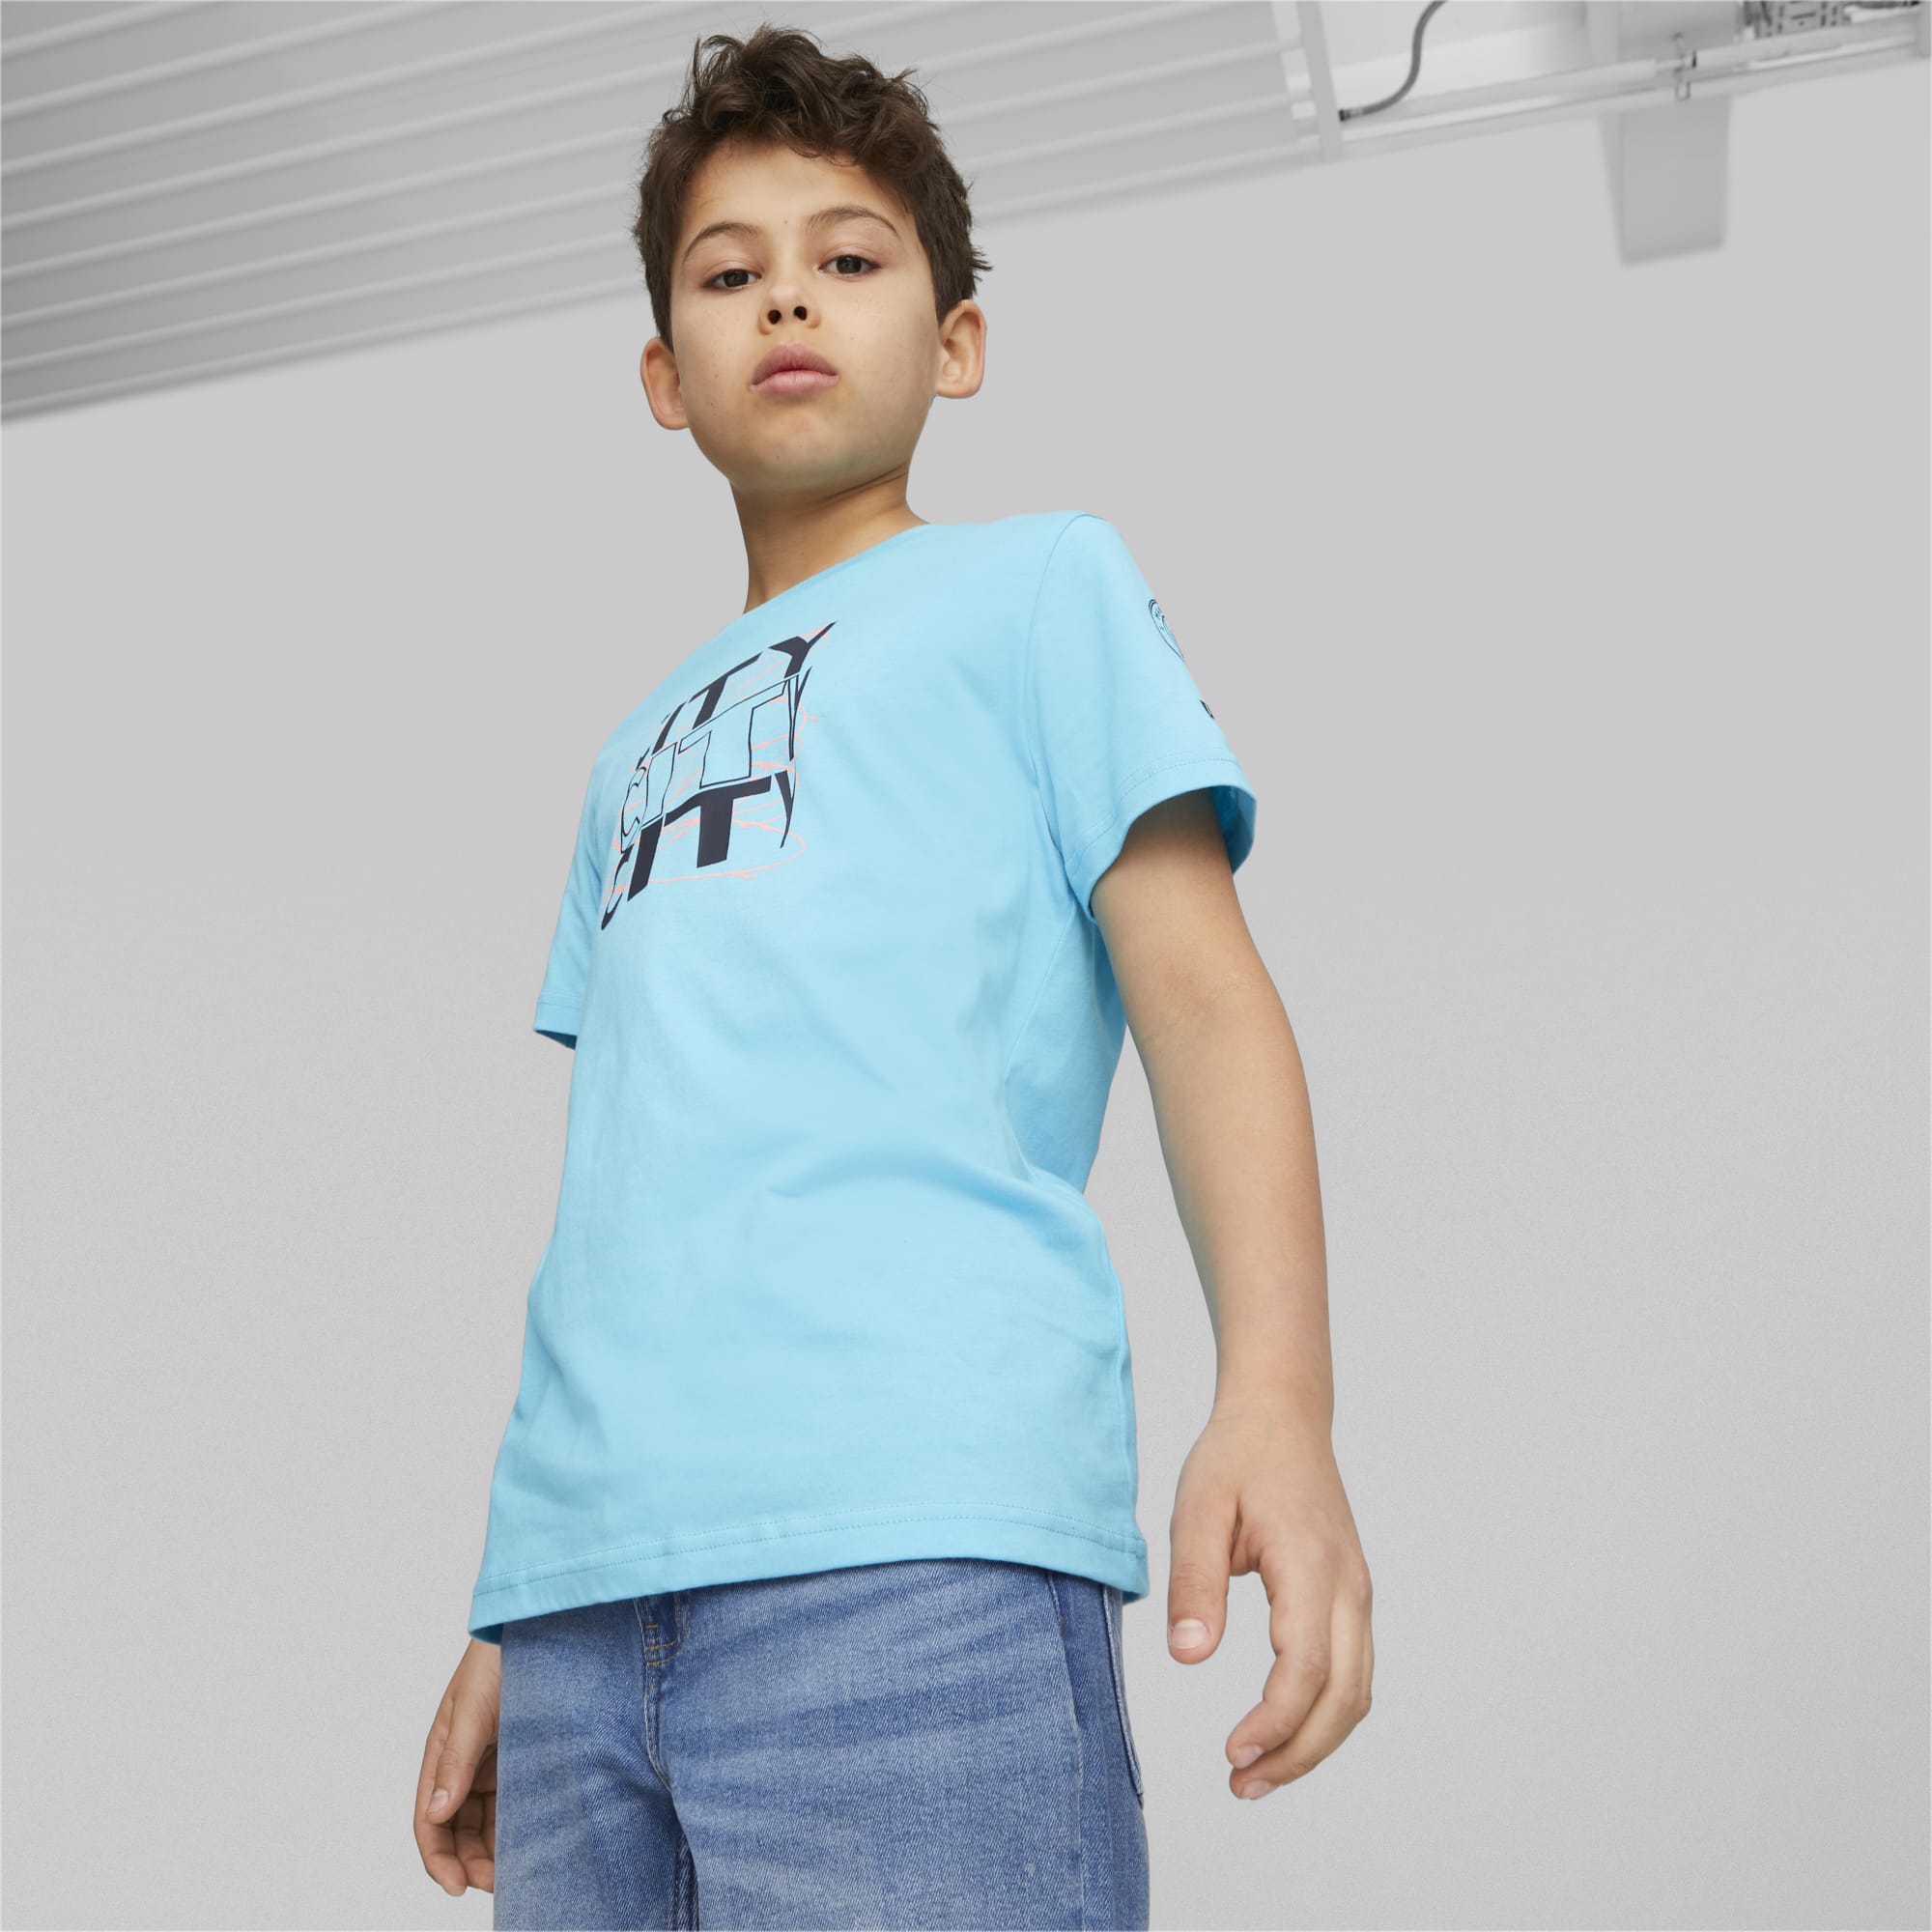 PUMA Manchester City Ftblcore Youth Graphic T-Shirt, Dark Blue